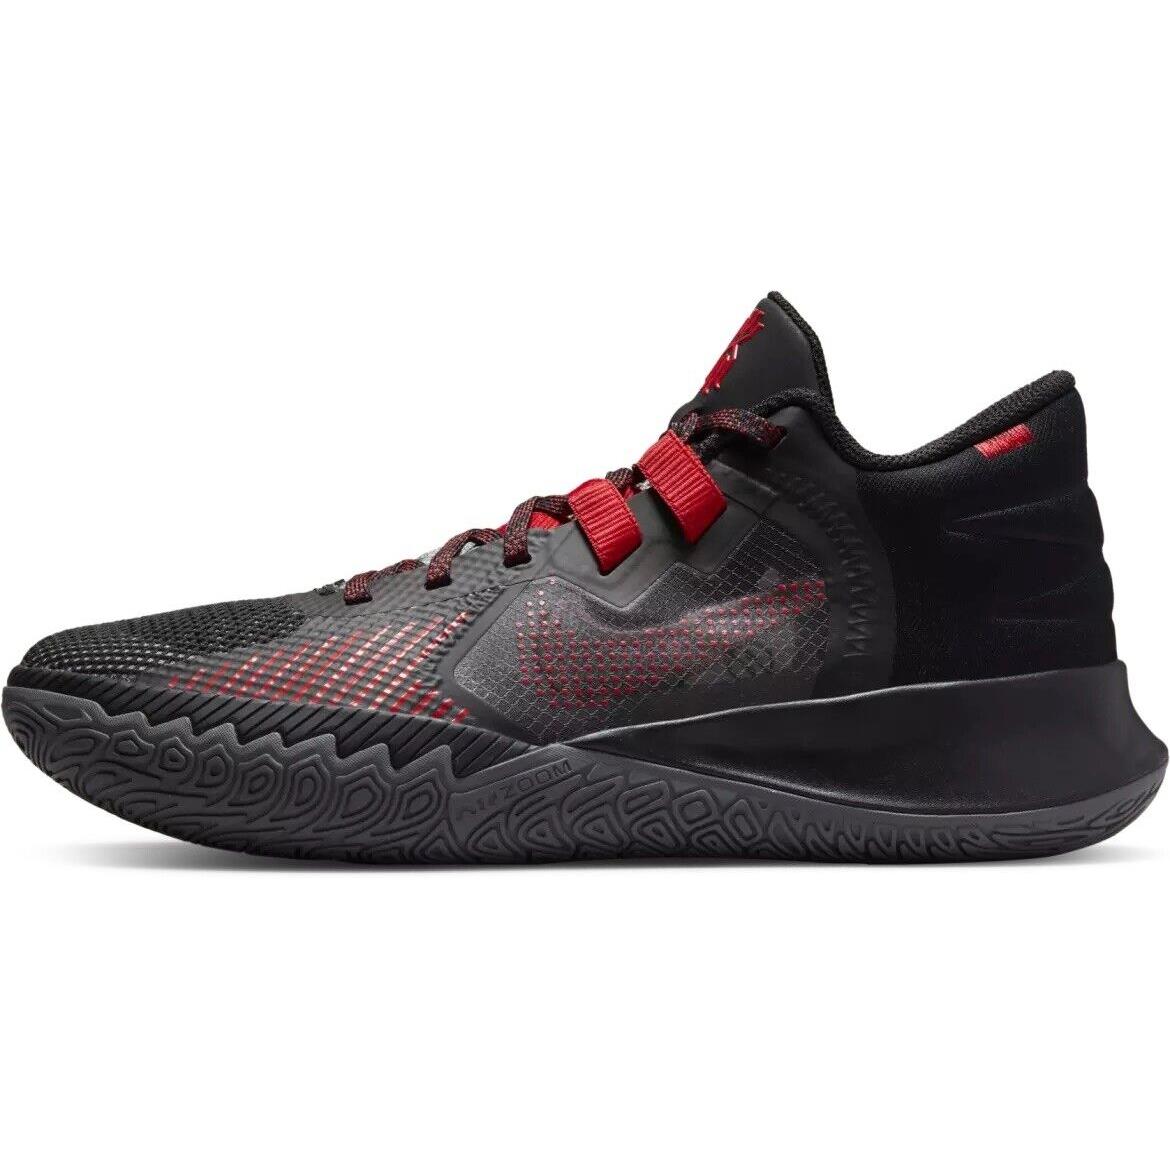 Mens Nike Kyrie Flytrap V 5 Basketball Shoes Sneakers Sz 11 Black Red CZ4100 003